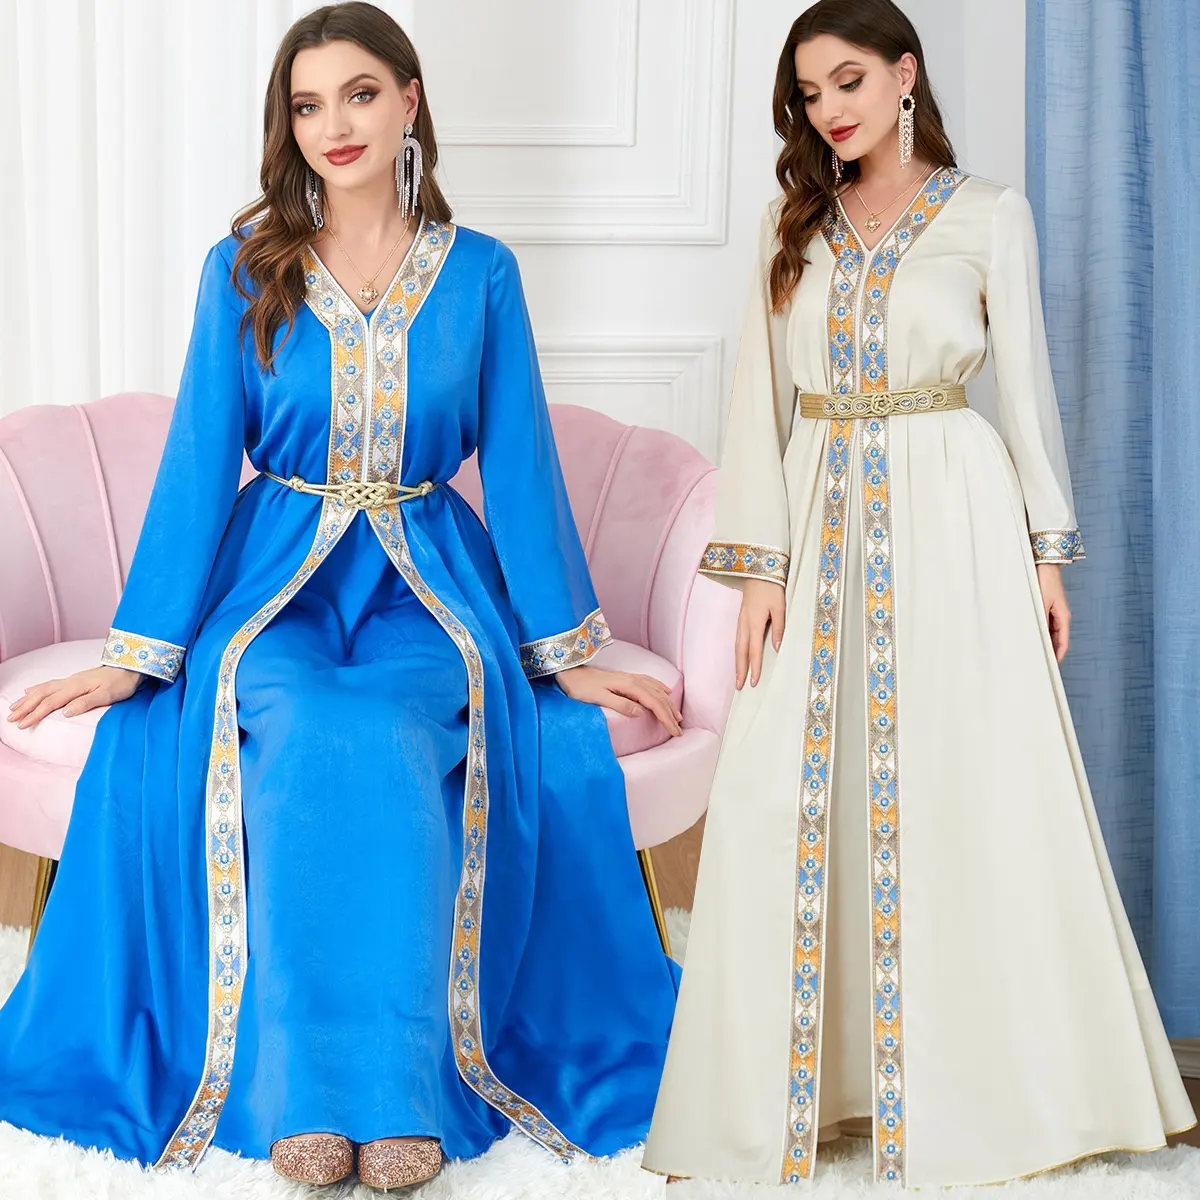 Commercio all'ingrosso Dubai Dress Women set musulmani nastro di pizzo Abaya caftano matrimonio marocchino con cintura elegante Split Dubai arabo turchia vestiti